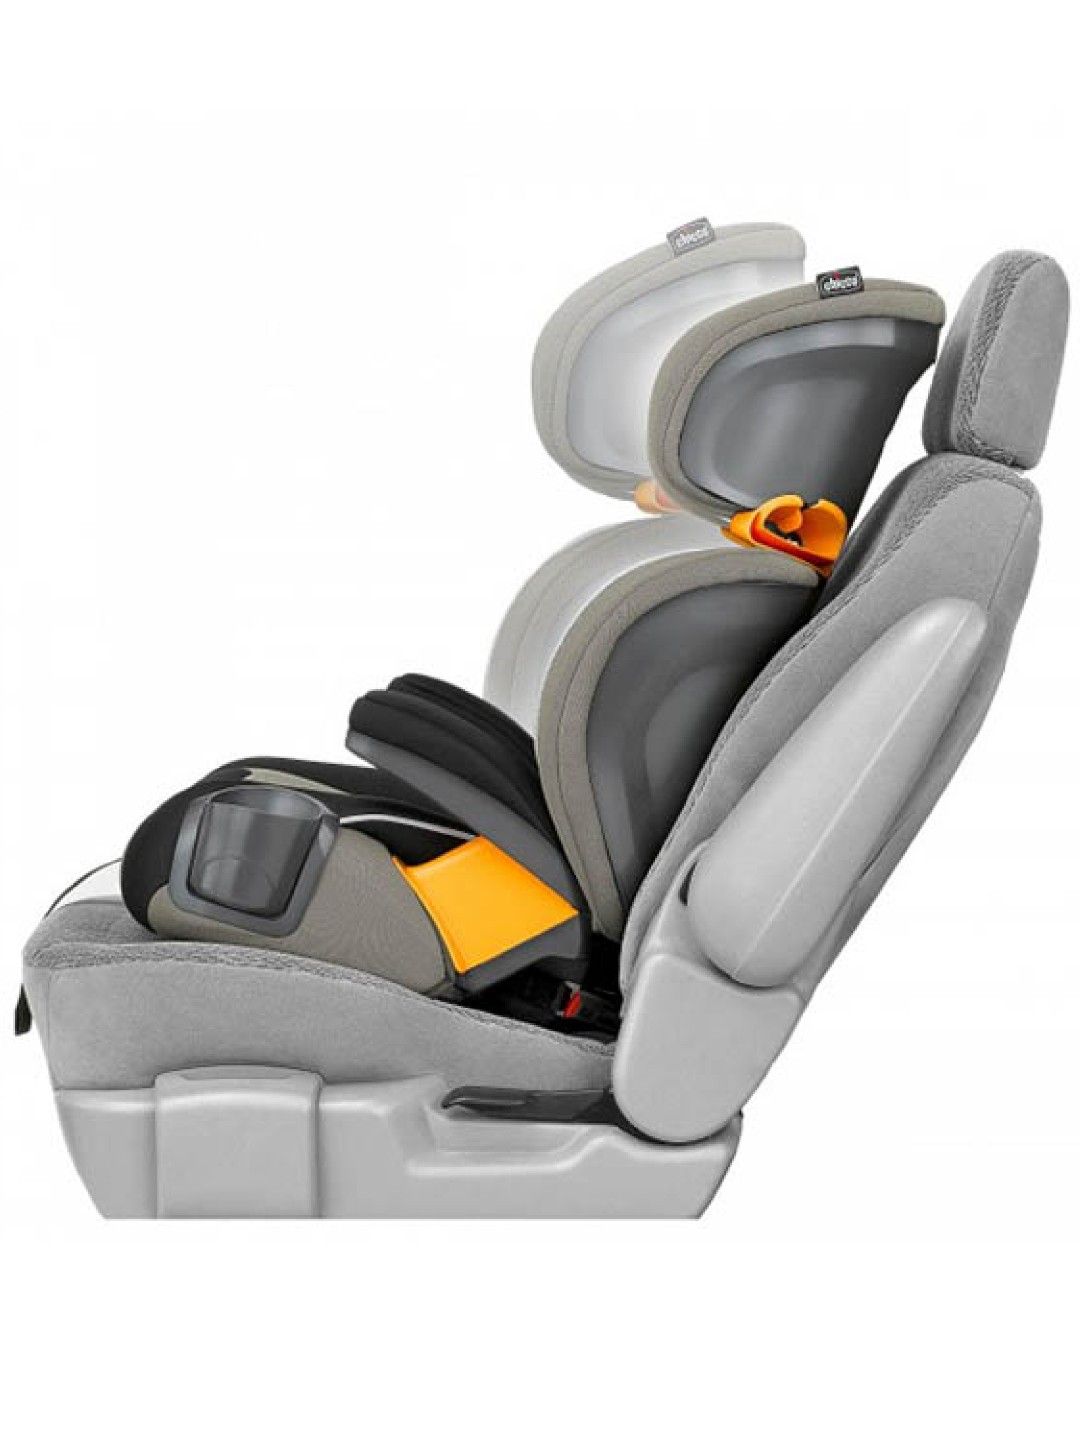 Chicco KidFit Car Seat Group 1/2/3 (Jasper) (No Color- Image 4)